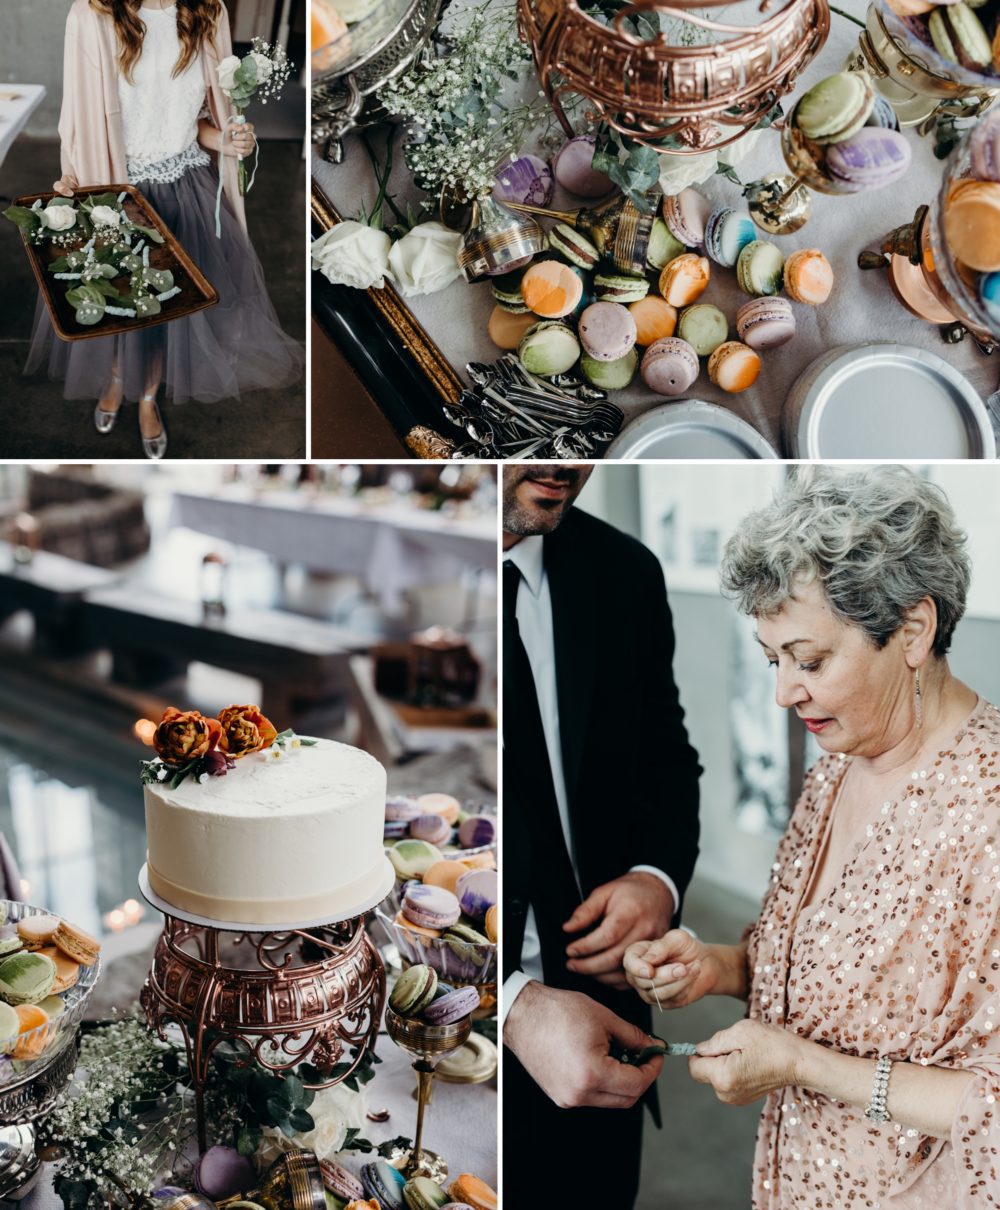 Wedding dessert ideas by Briana Morrison Photography